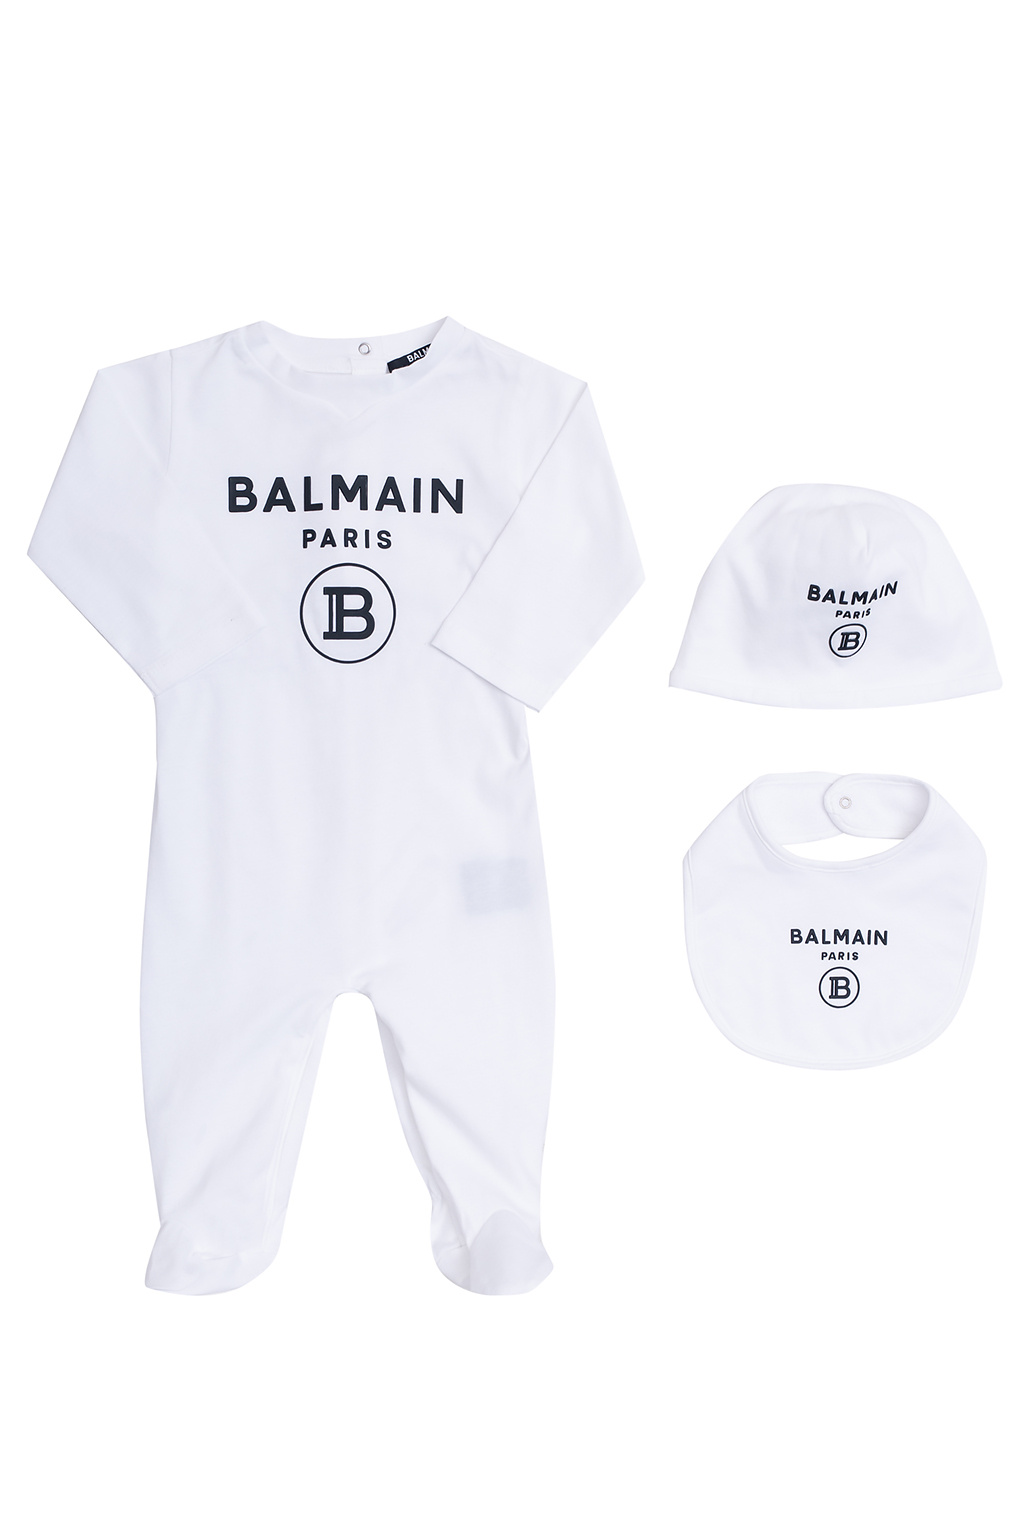 balmain decorative Kids Romper suit, bib & beanie set